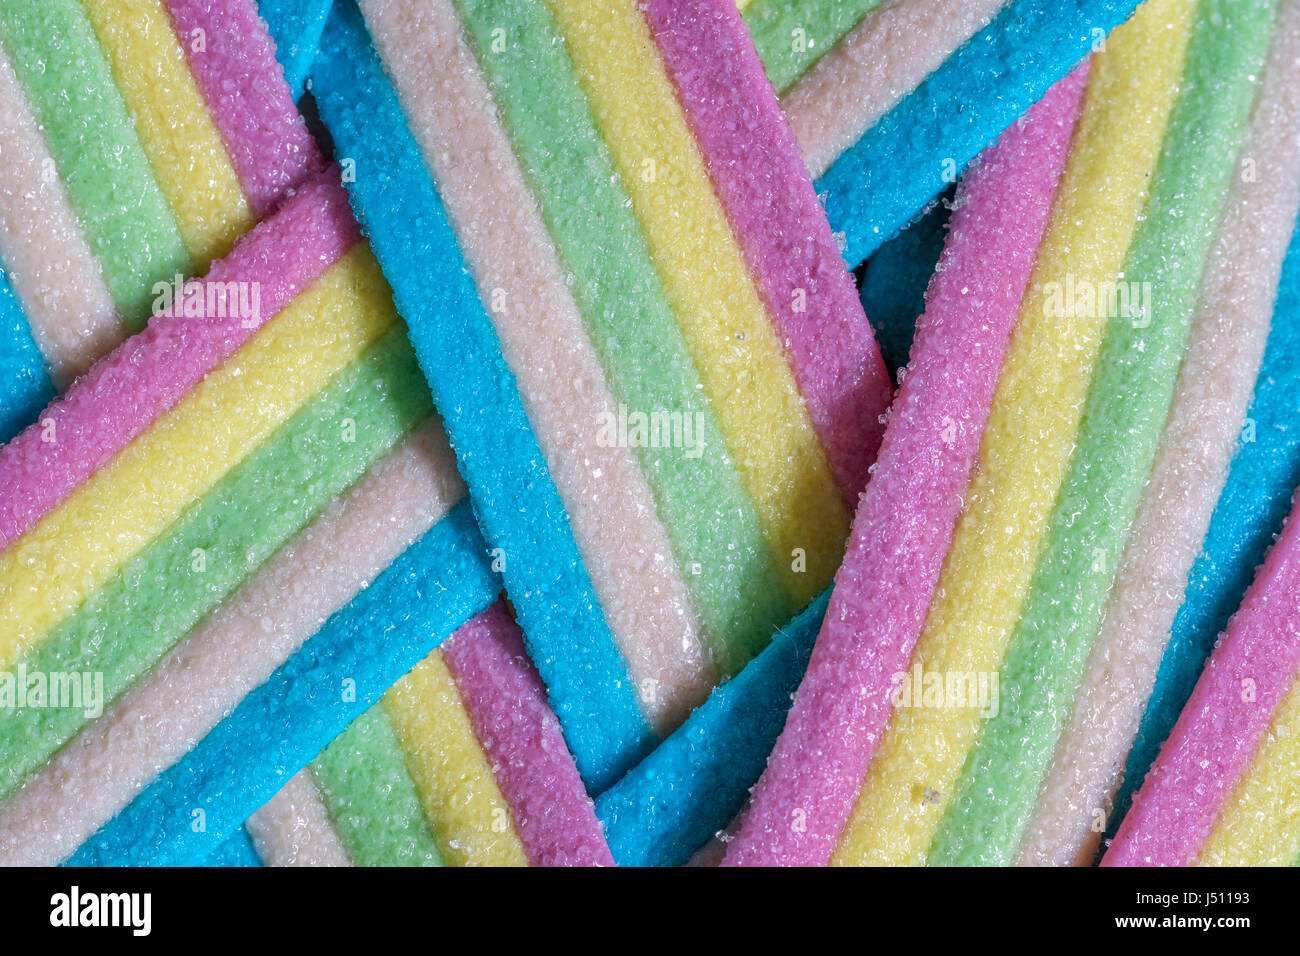 Unicorn Rainbow candy stripes Stock Photo